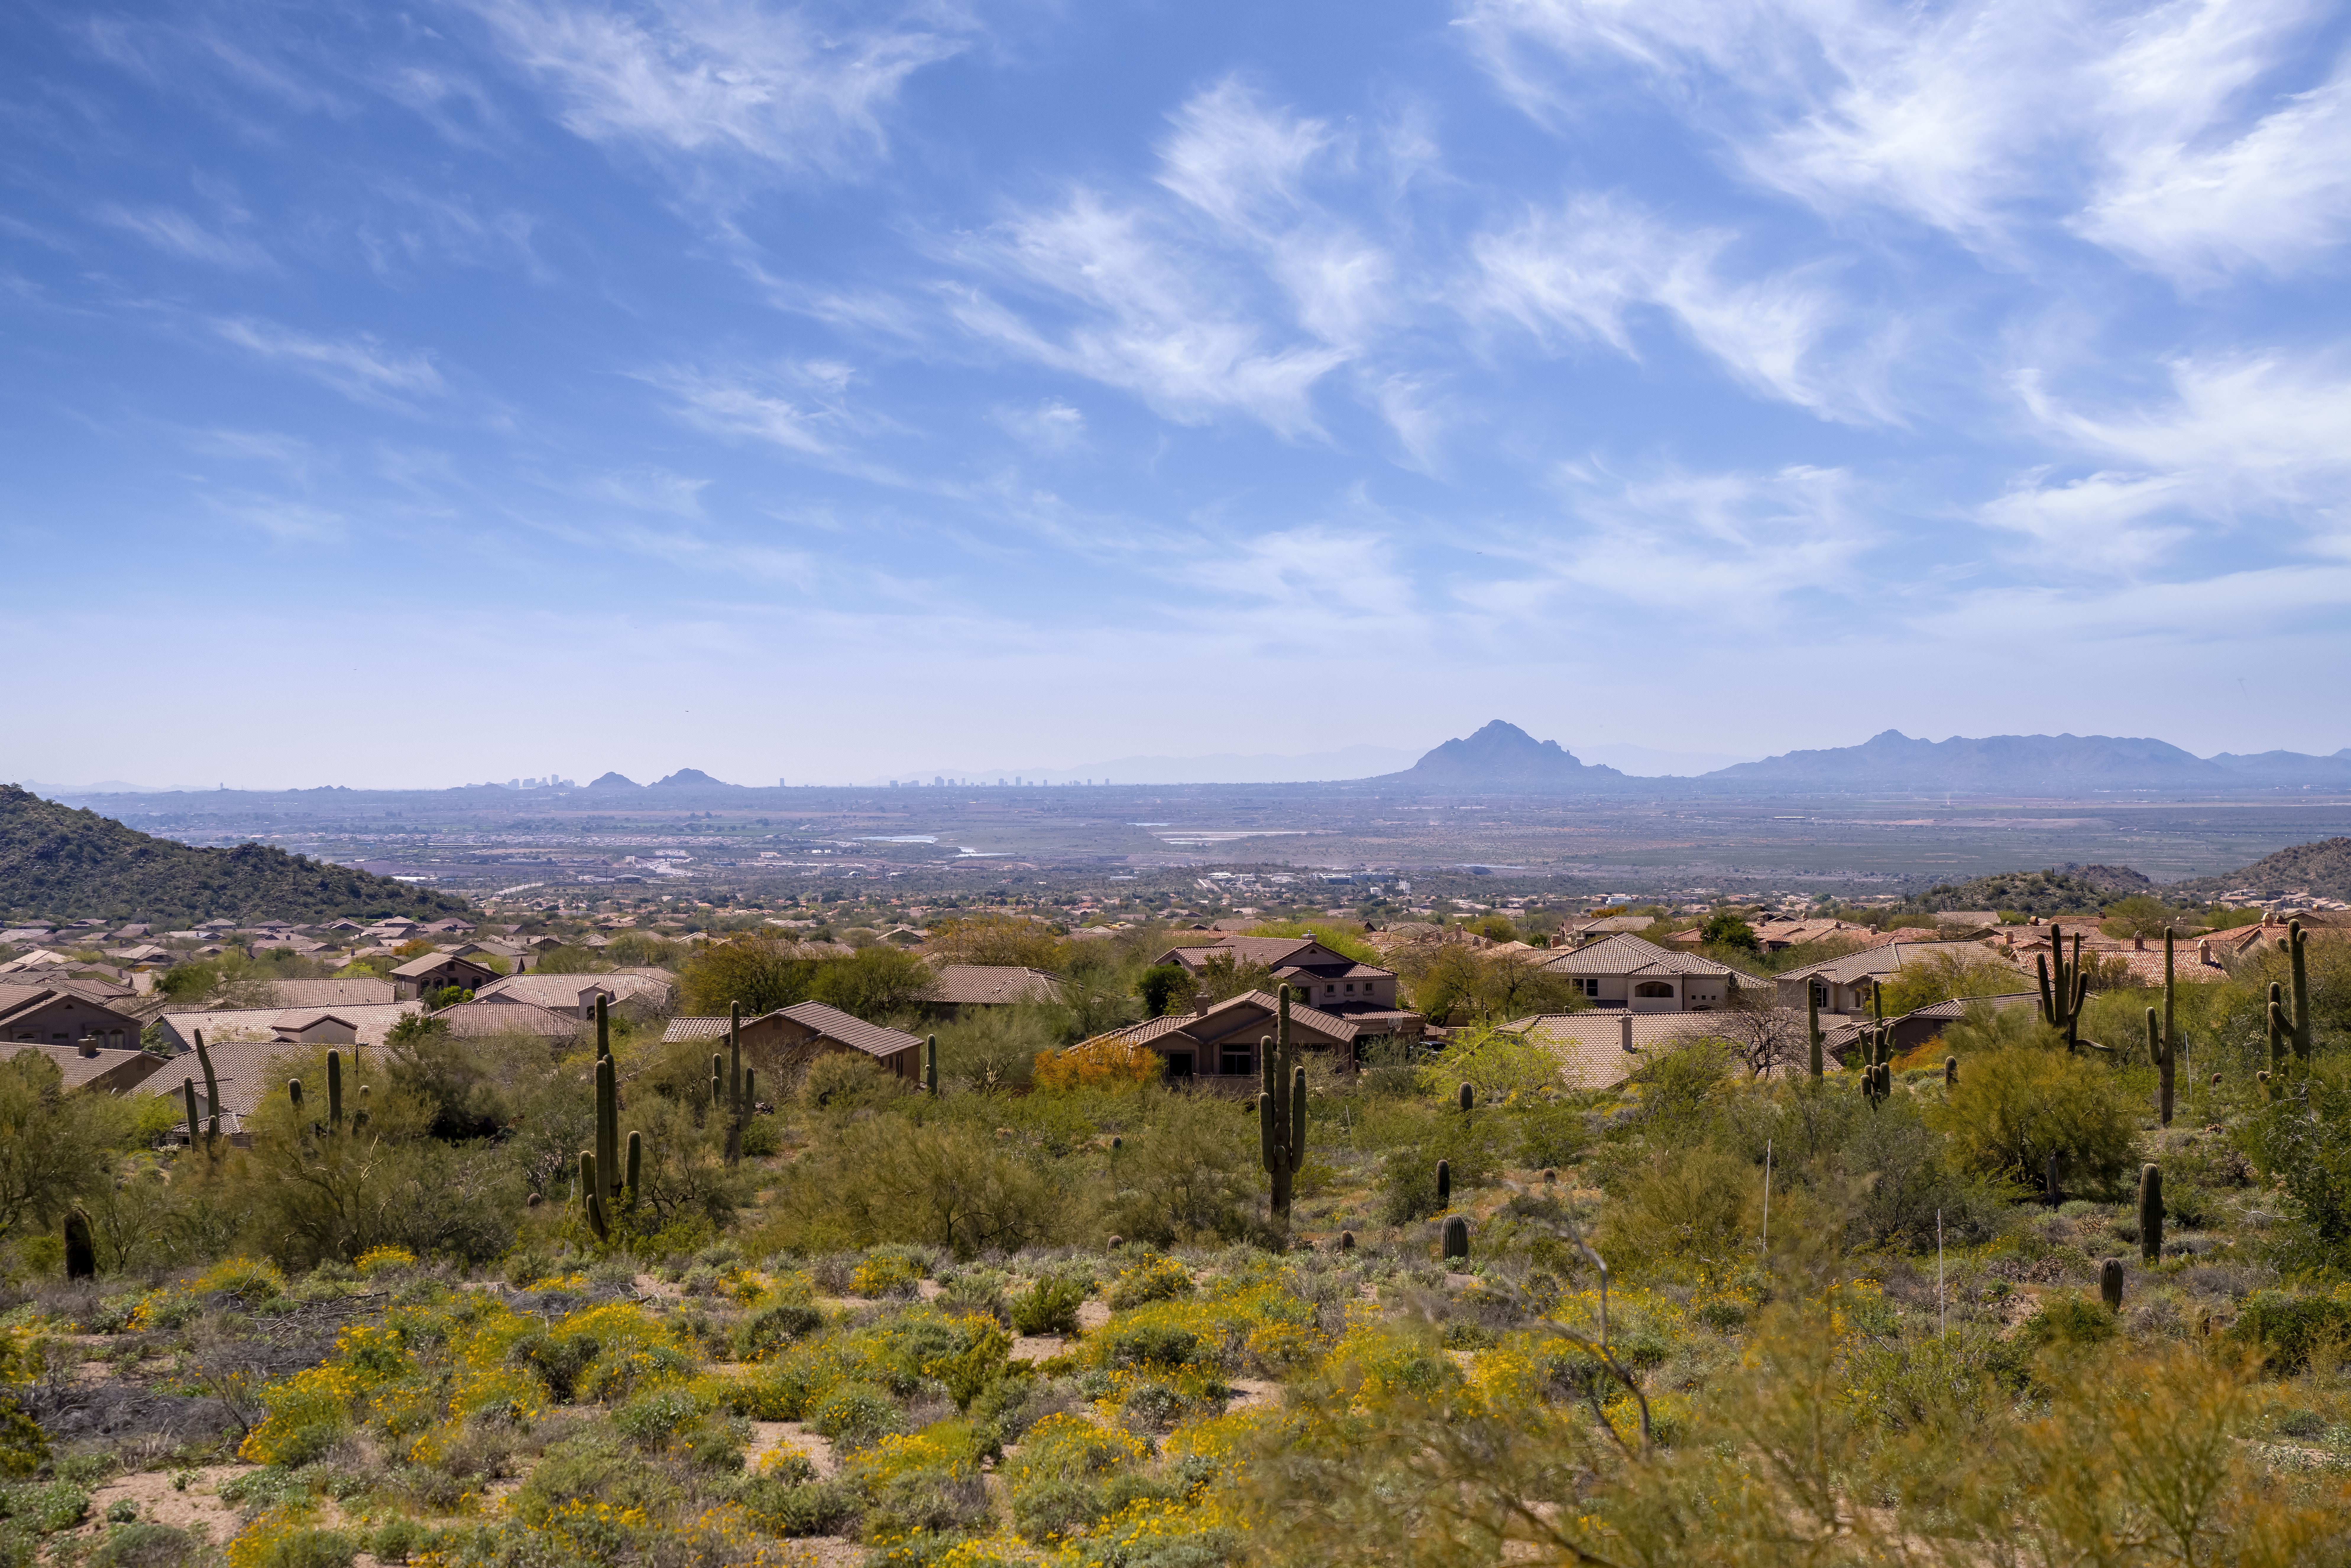 The Las Sendas Community of Mesa, Arizona